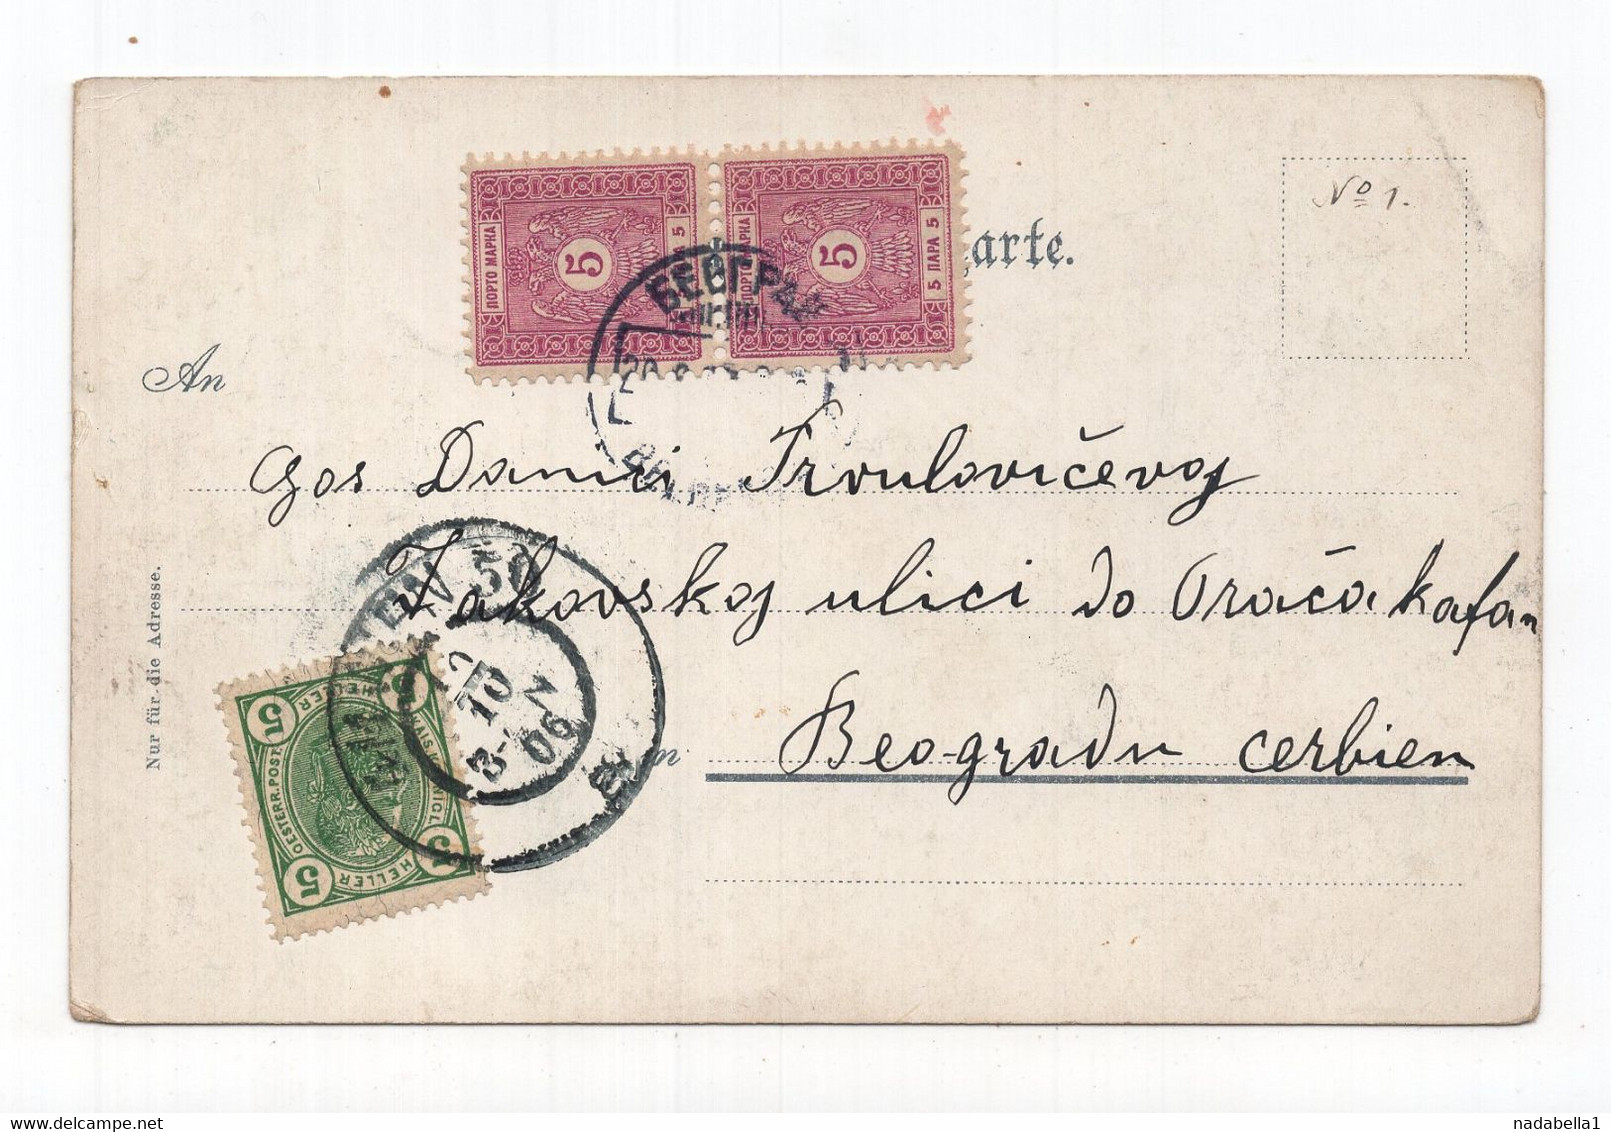 1906 AUSTRIA,VIENNA POSTCARD,USED,POSTAGE DUE,SERBIA,BELGRADE, PAIR 5 PARA PORTO SERBIA STAMPS - Ringstrasse